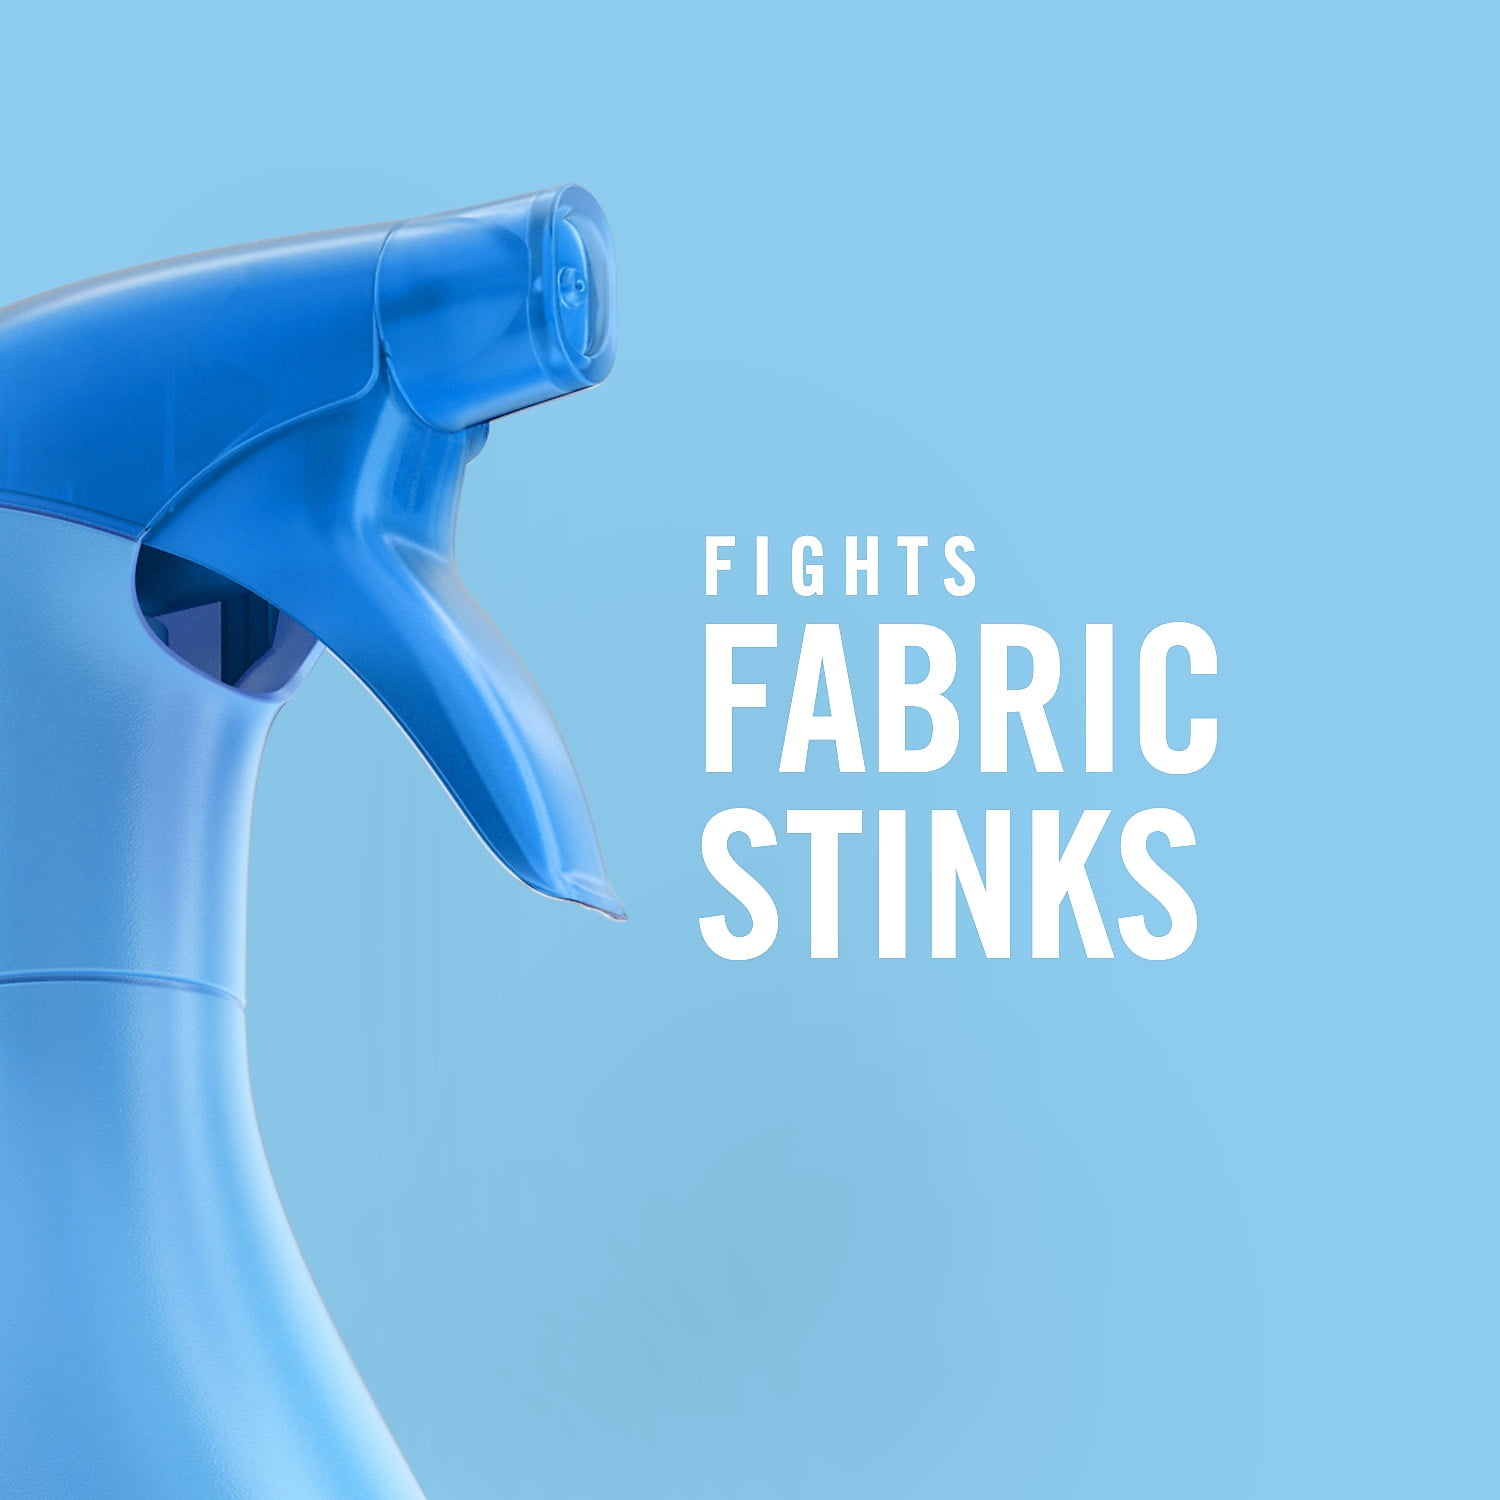  Febreze Fabric Refresher, Odor Eliminator Extra Strength +  Fabric Ocean Scent Waterlily Ginger Hinoki, 2 Pack (27 OZ Each) - Brand :  Febreze : Health & Household